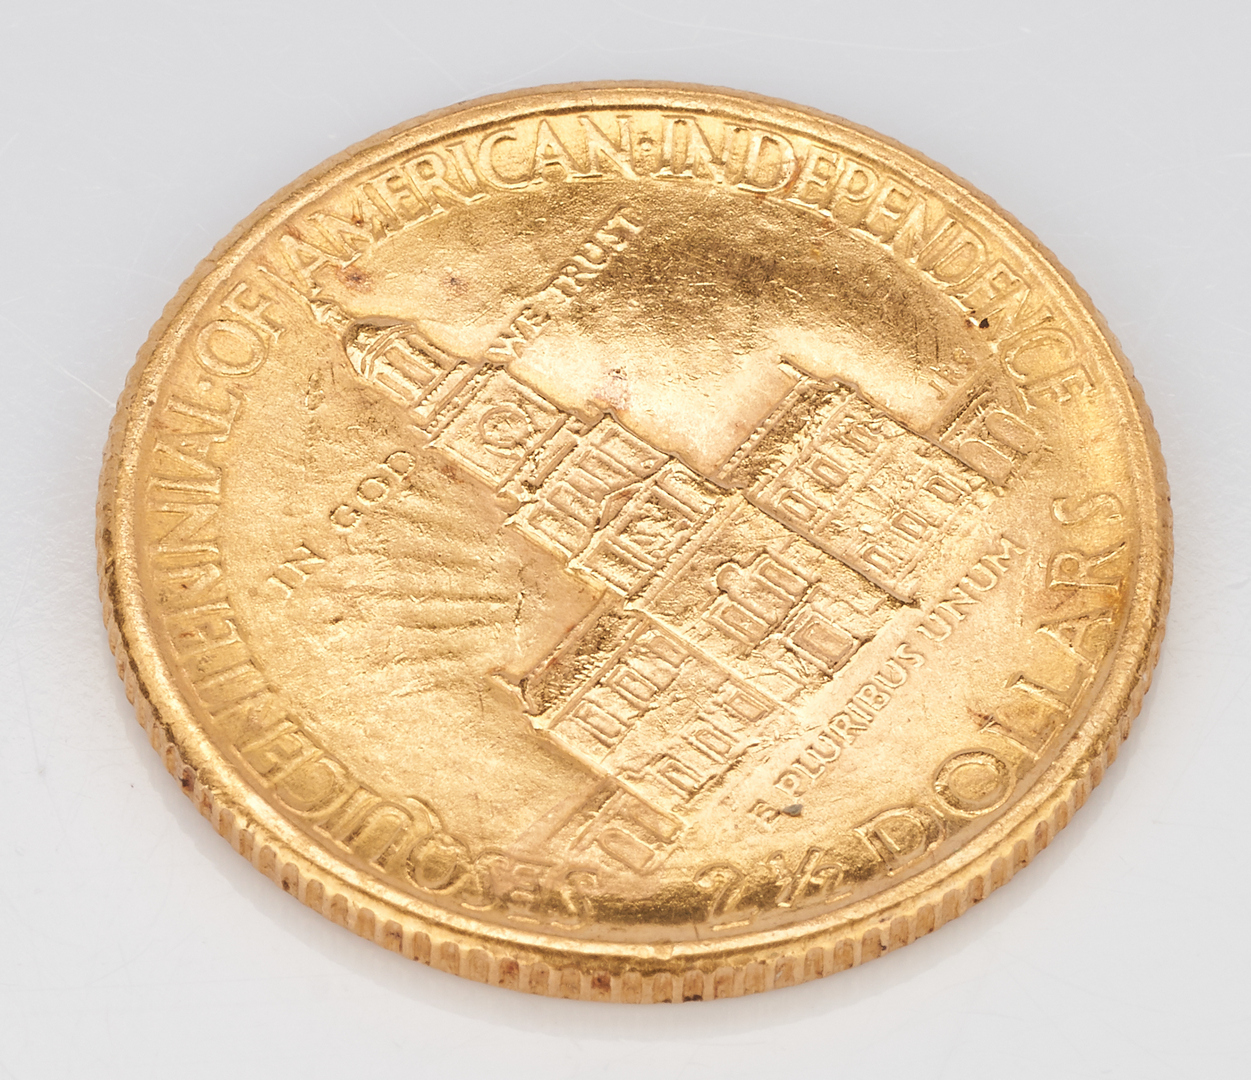 Lot 736: 1926 $2.50 U.S. Sesquicentennial Gold Coin, Philadelphia Mint